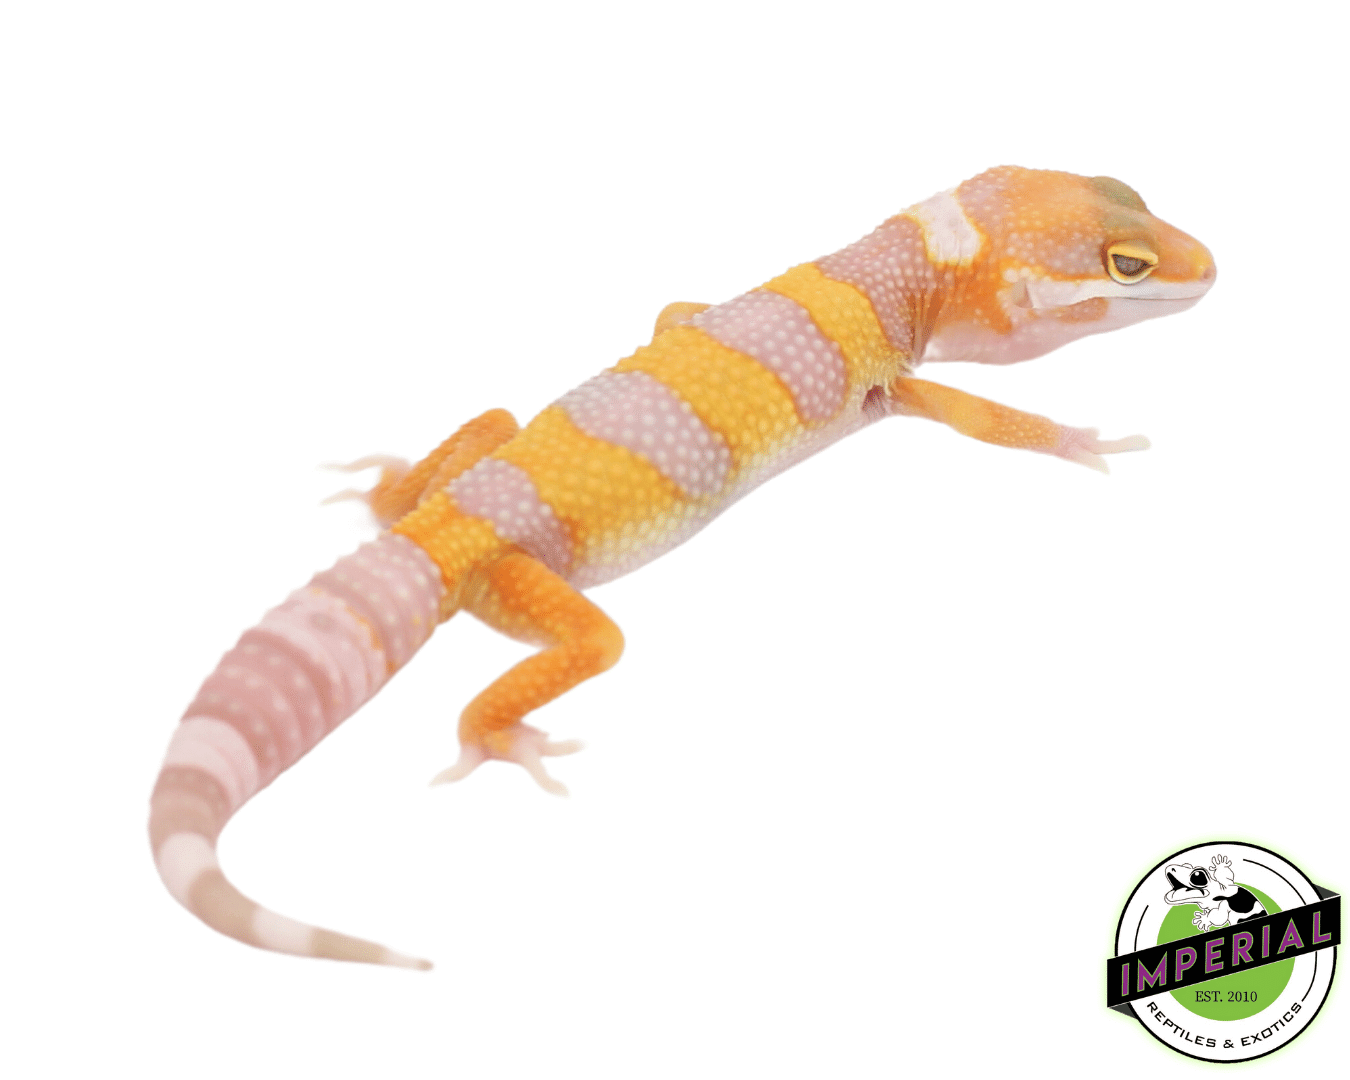 leopard gecko for sale, buy reptiles online